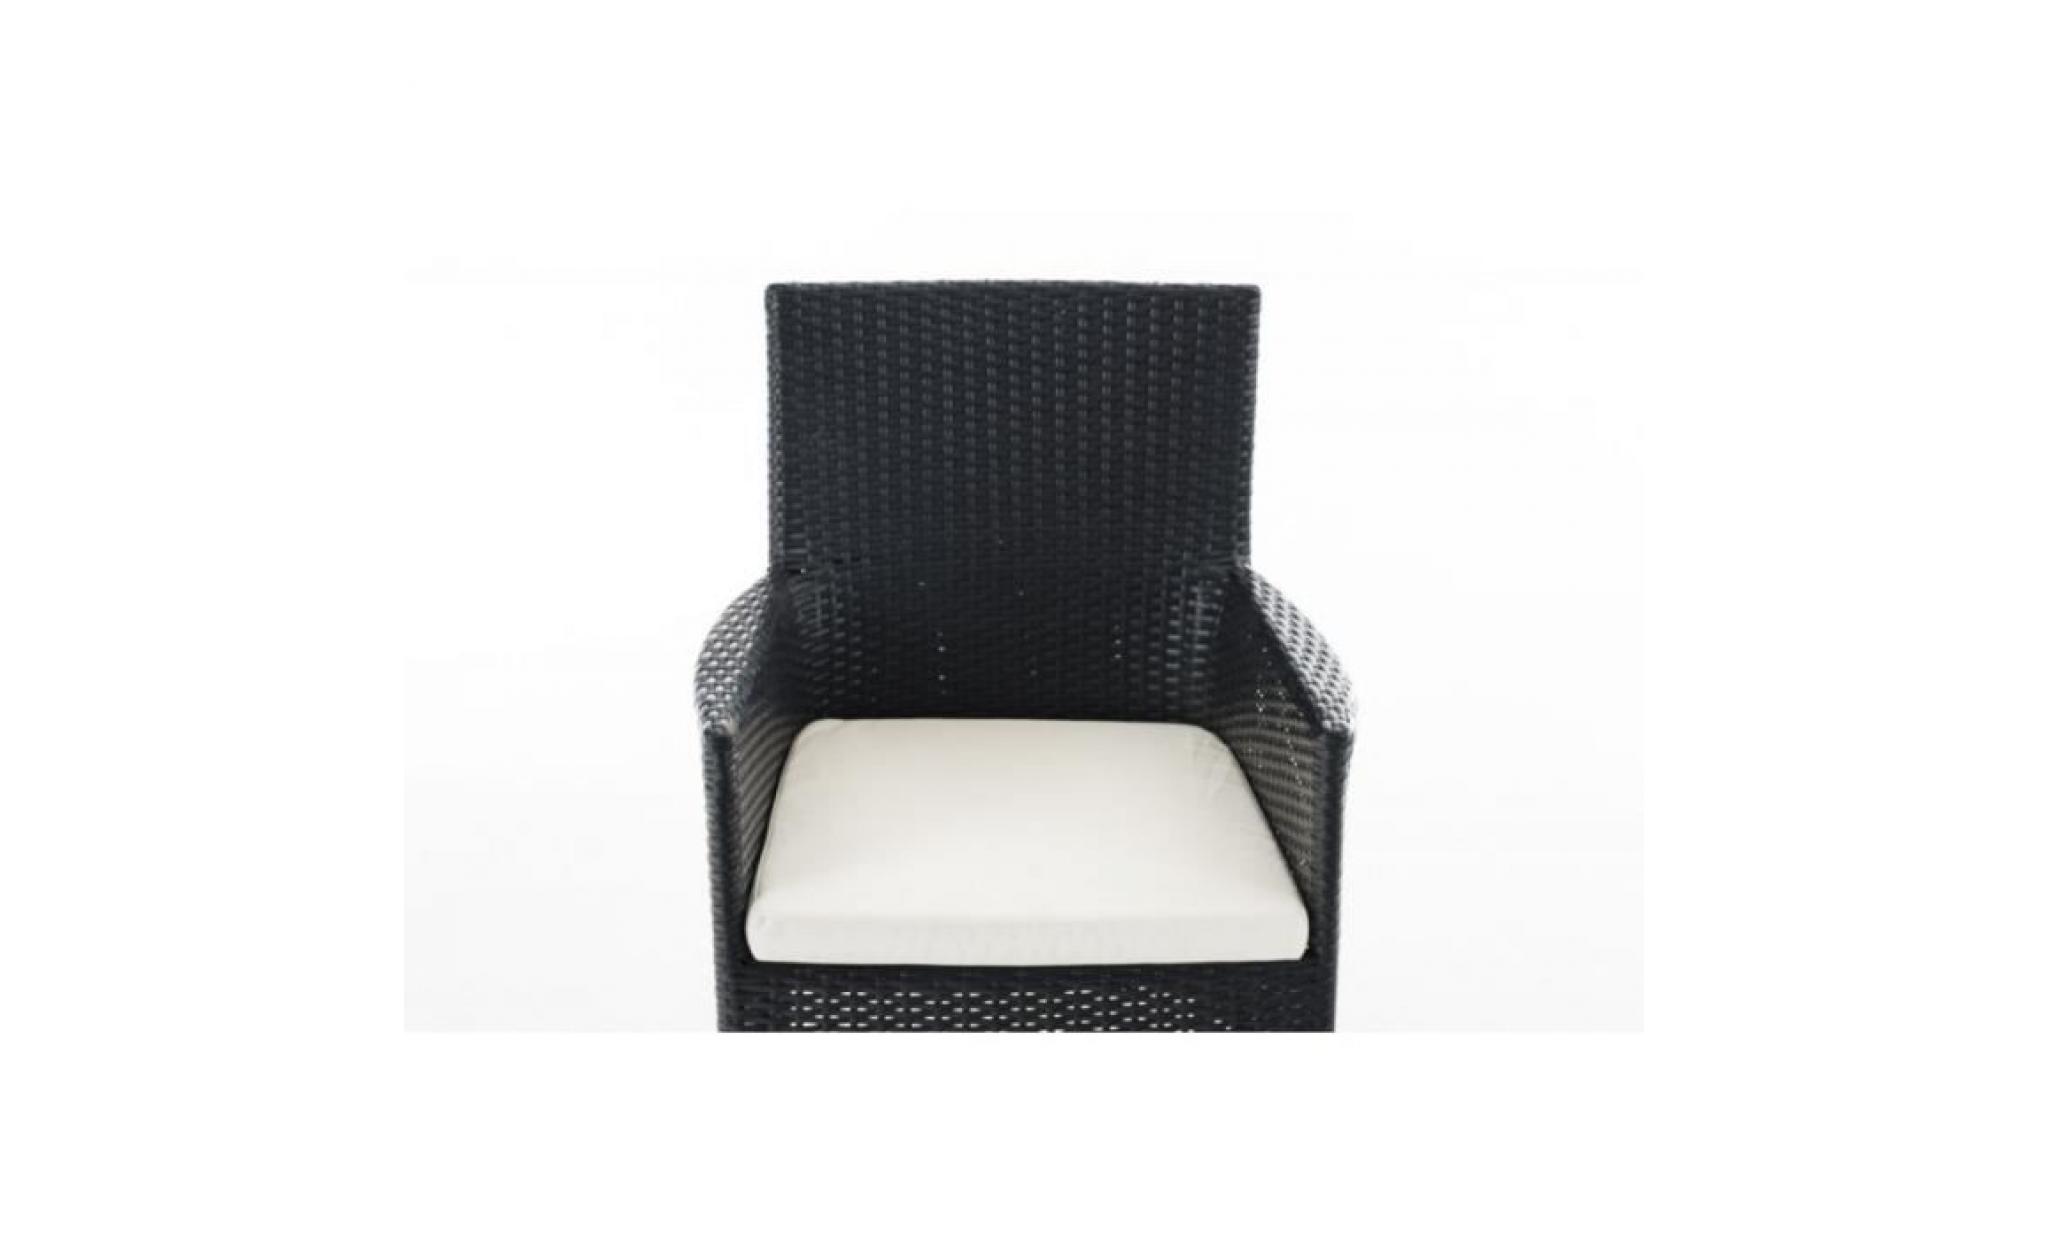 fauteuil de jardin en polyrotin noir avec coussin mdj10057 pas cher